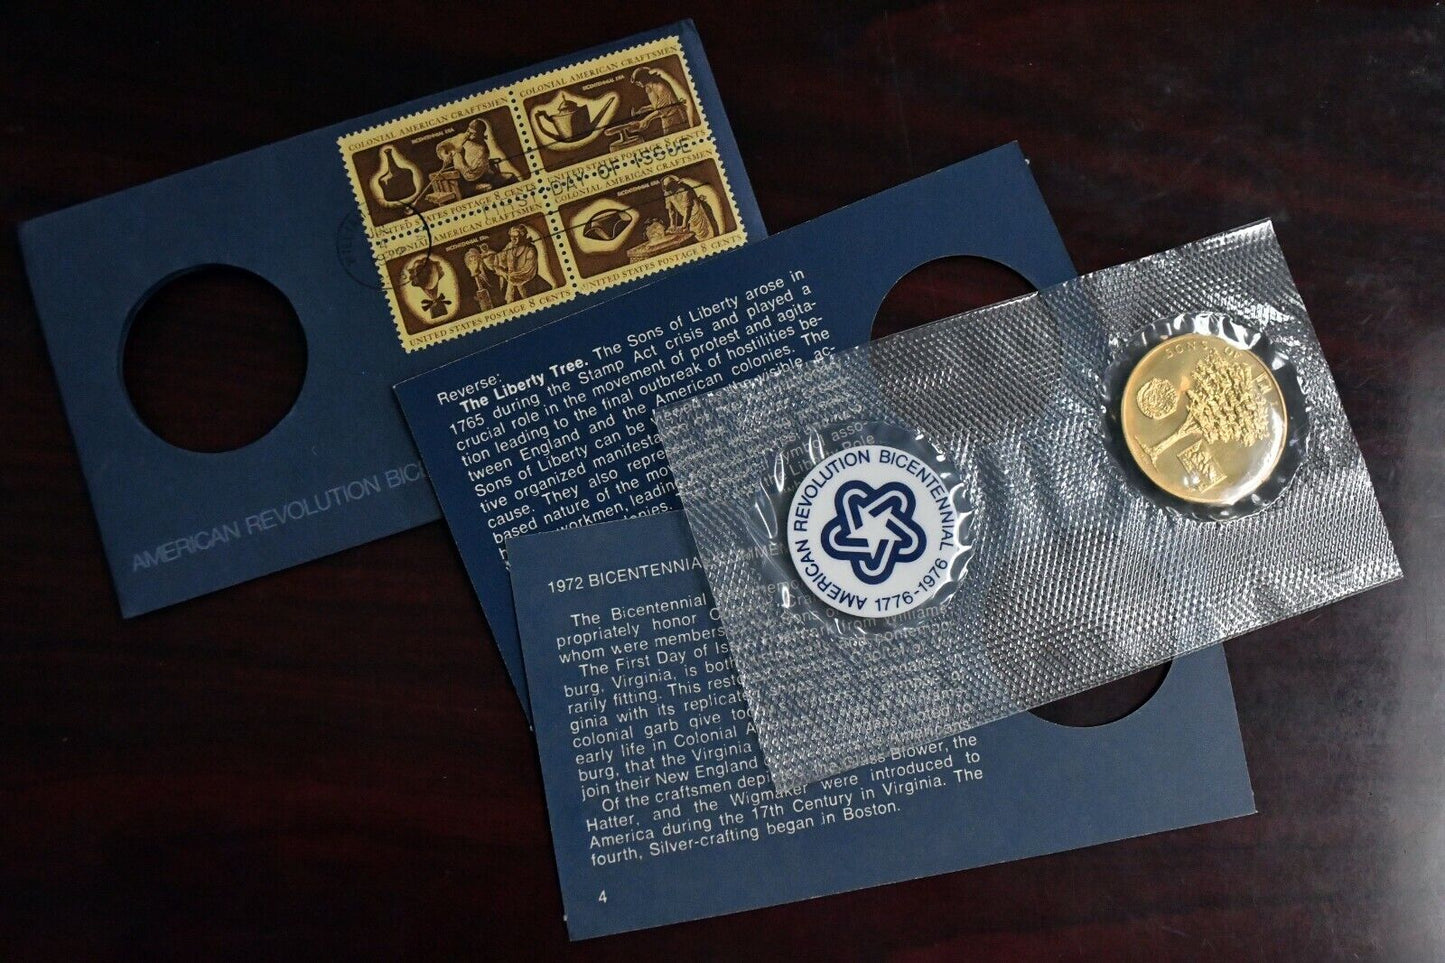 1972 American Revolution Bicentennial Medal Commemorative George Washington